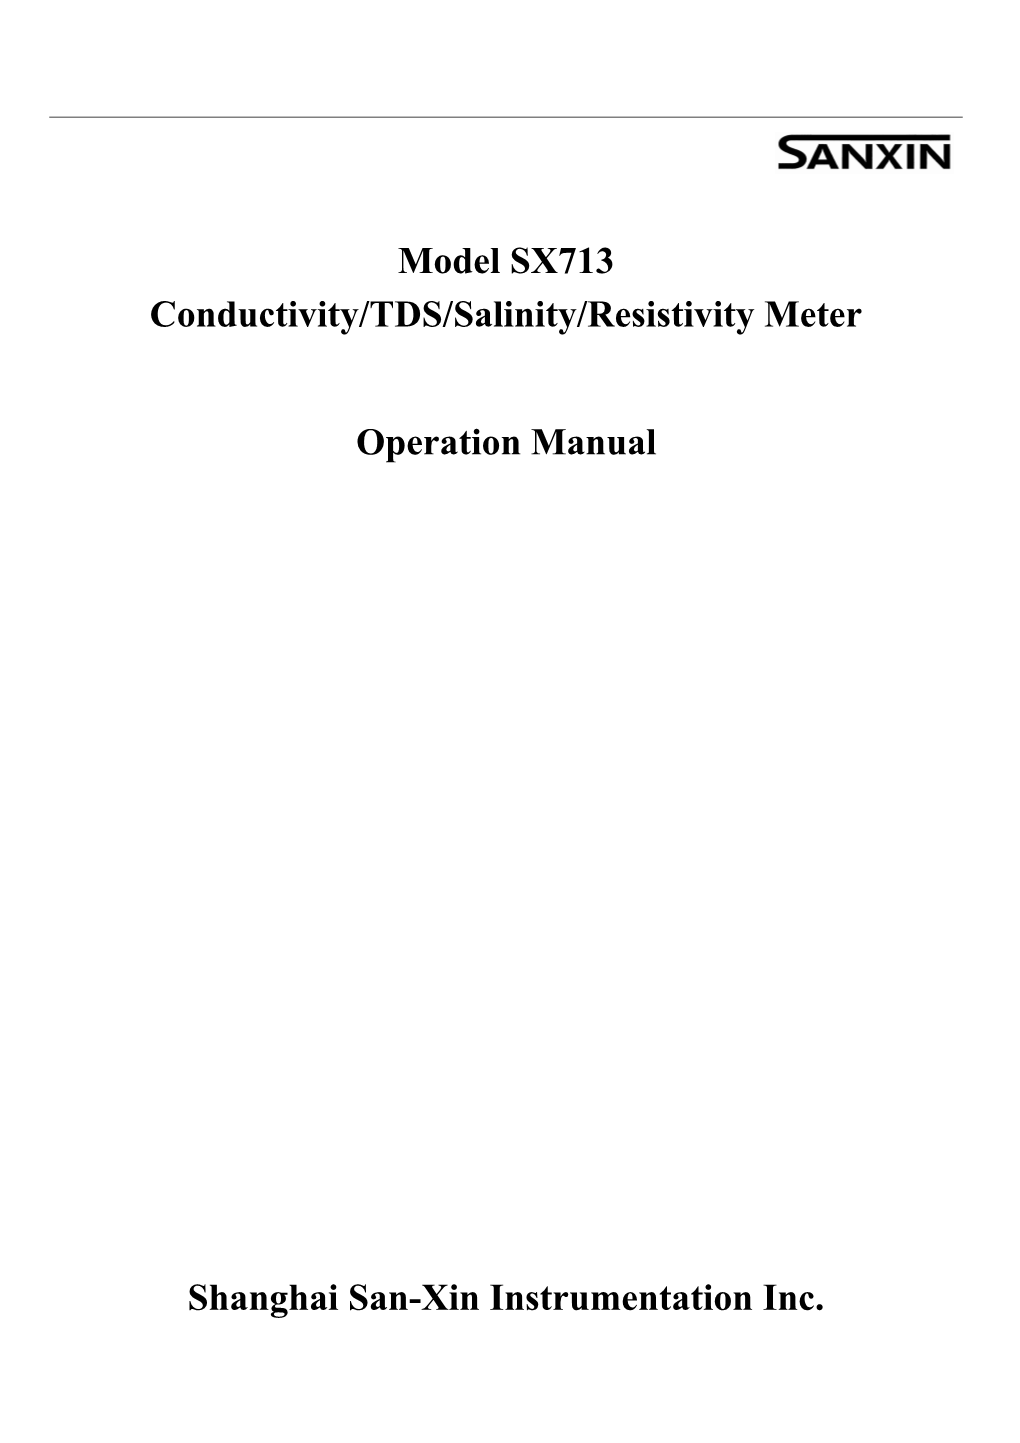 Conductivity/TDS/Salinity/Resistivity Meter